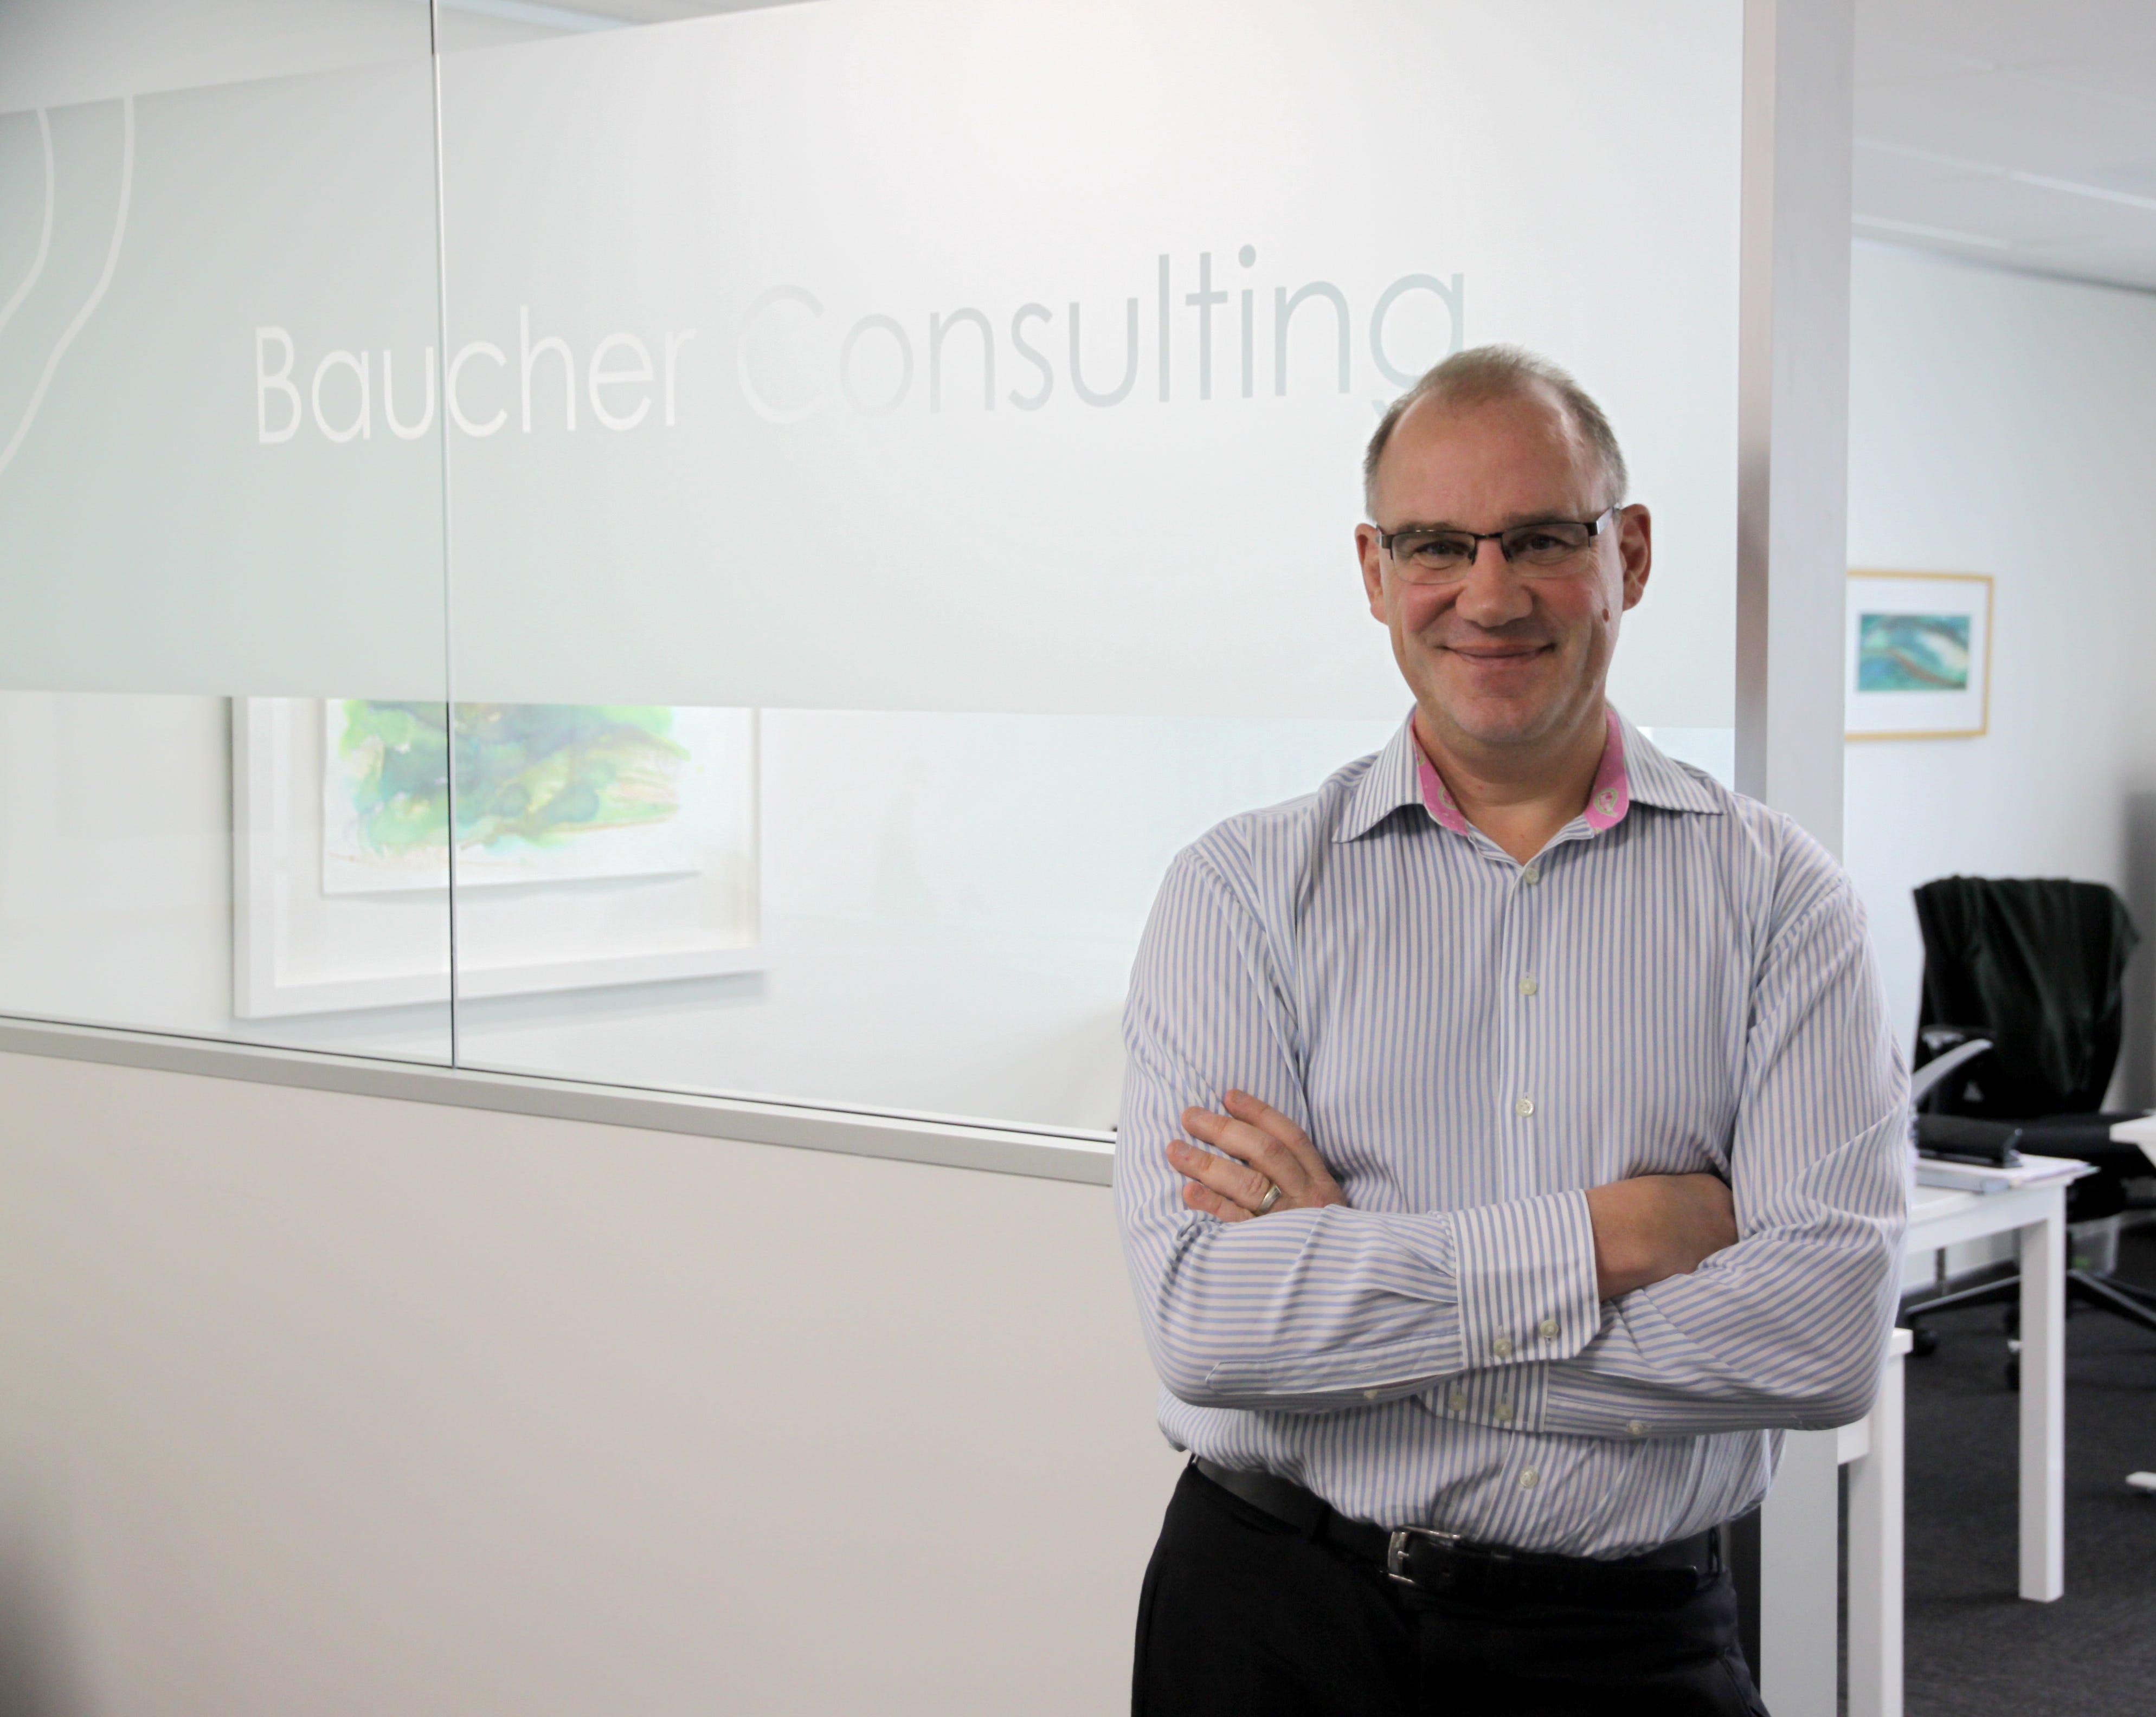 Baucher Consulting’s Newsletter